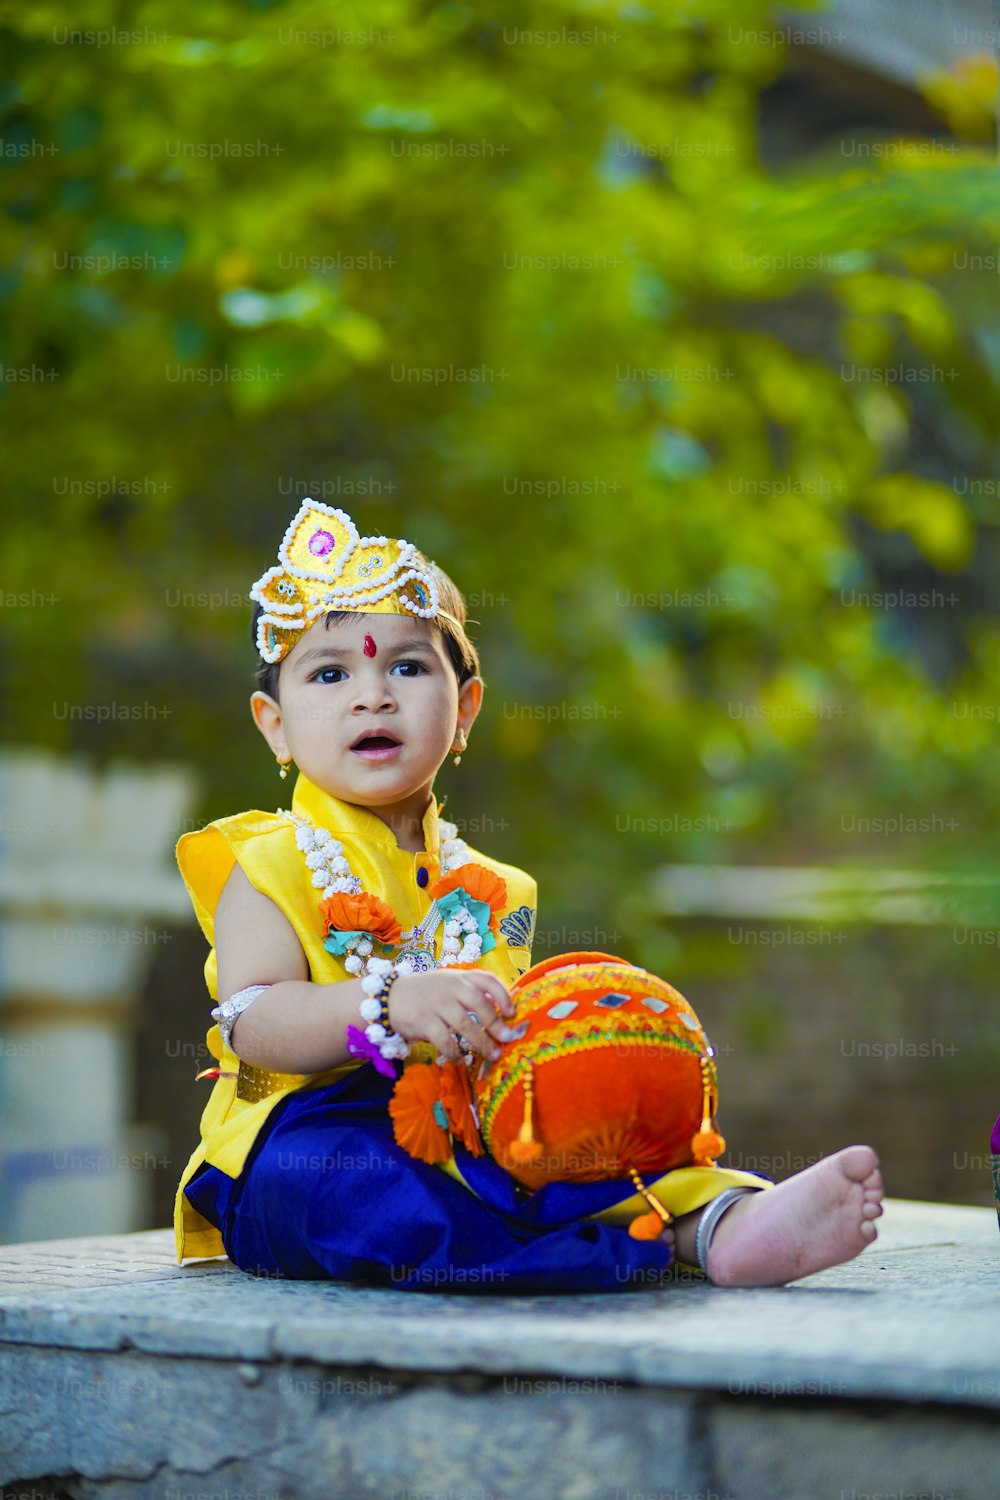 happy Janmashtami Greeting Card showing Little Indian boy posing as Shri krishna or kanha/kanhaiya with Dahi Handi picture and colourful flowers.